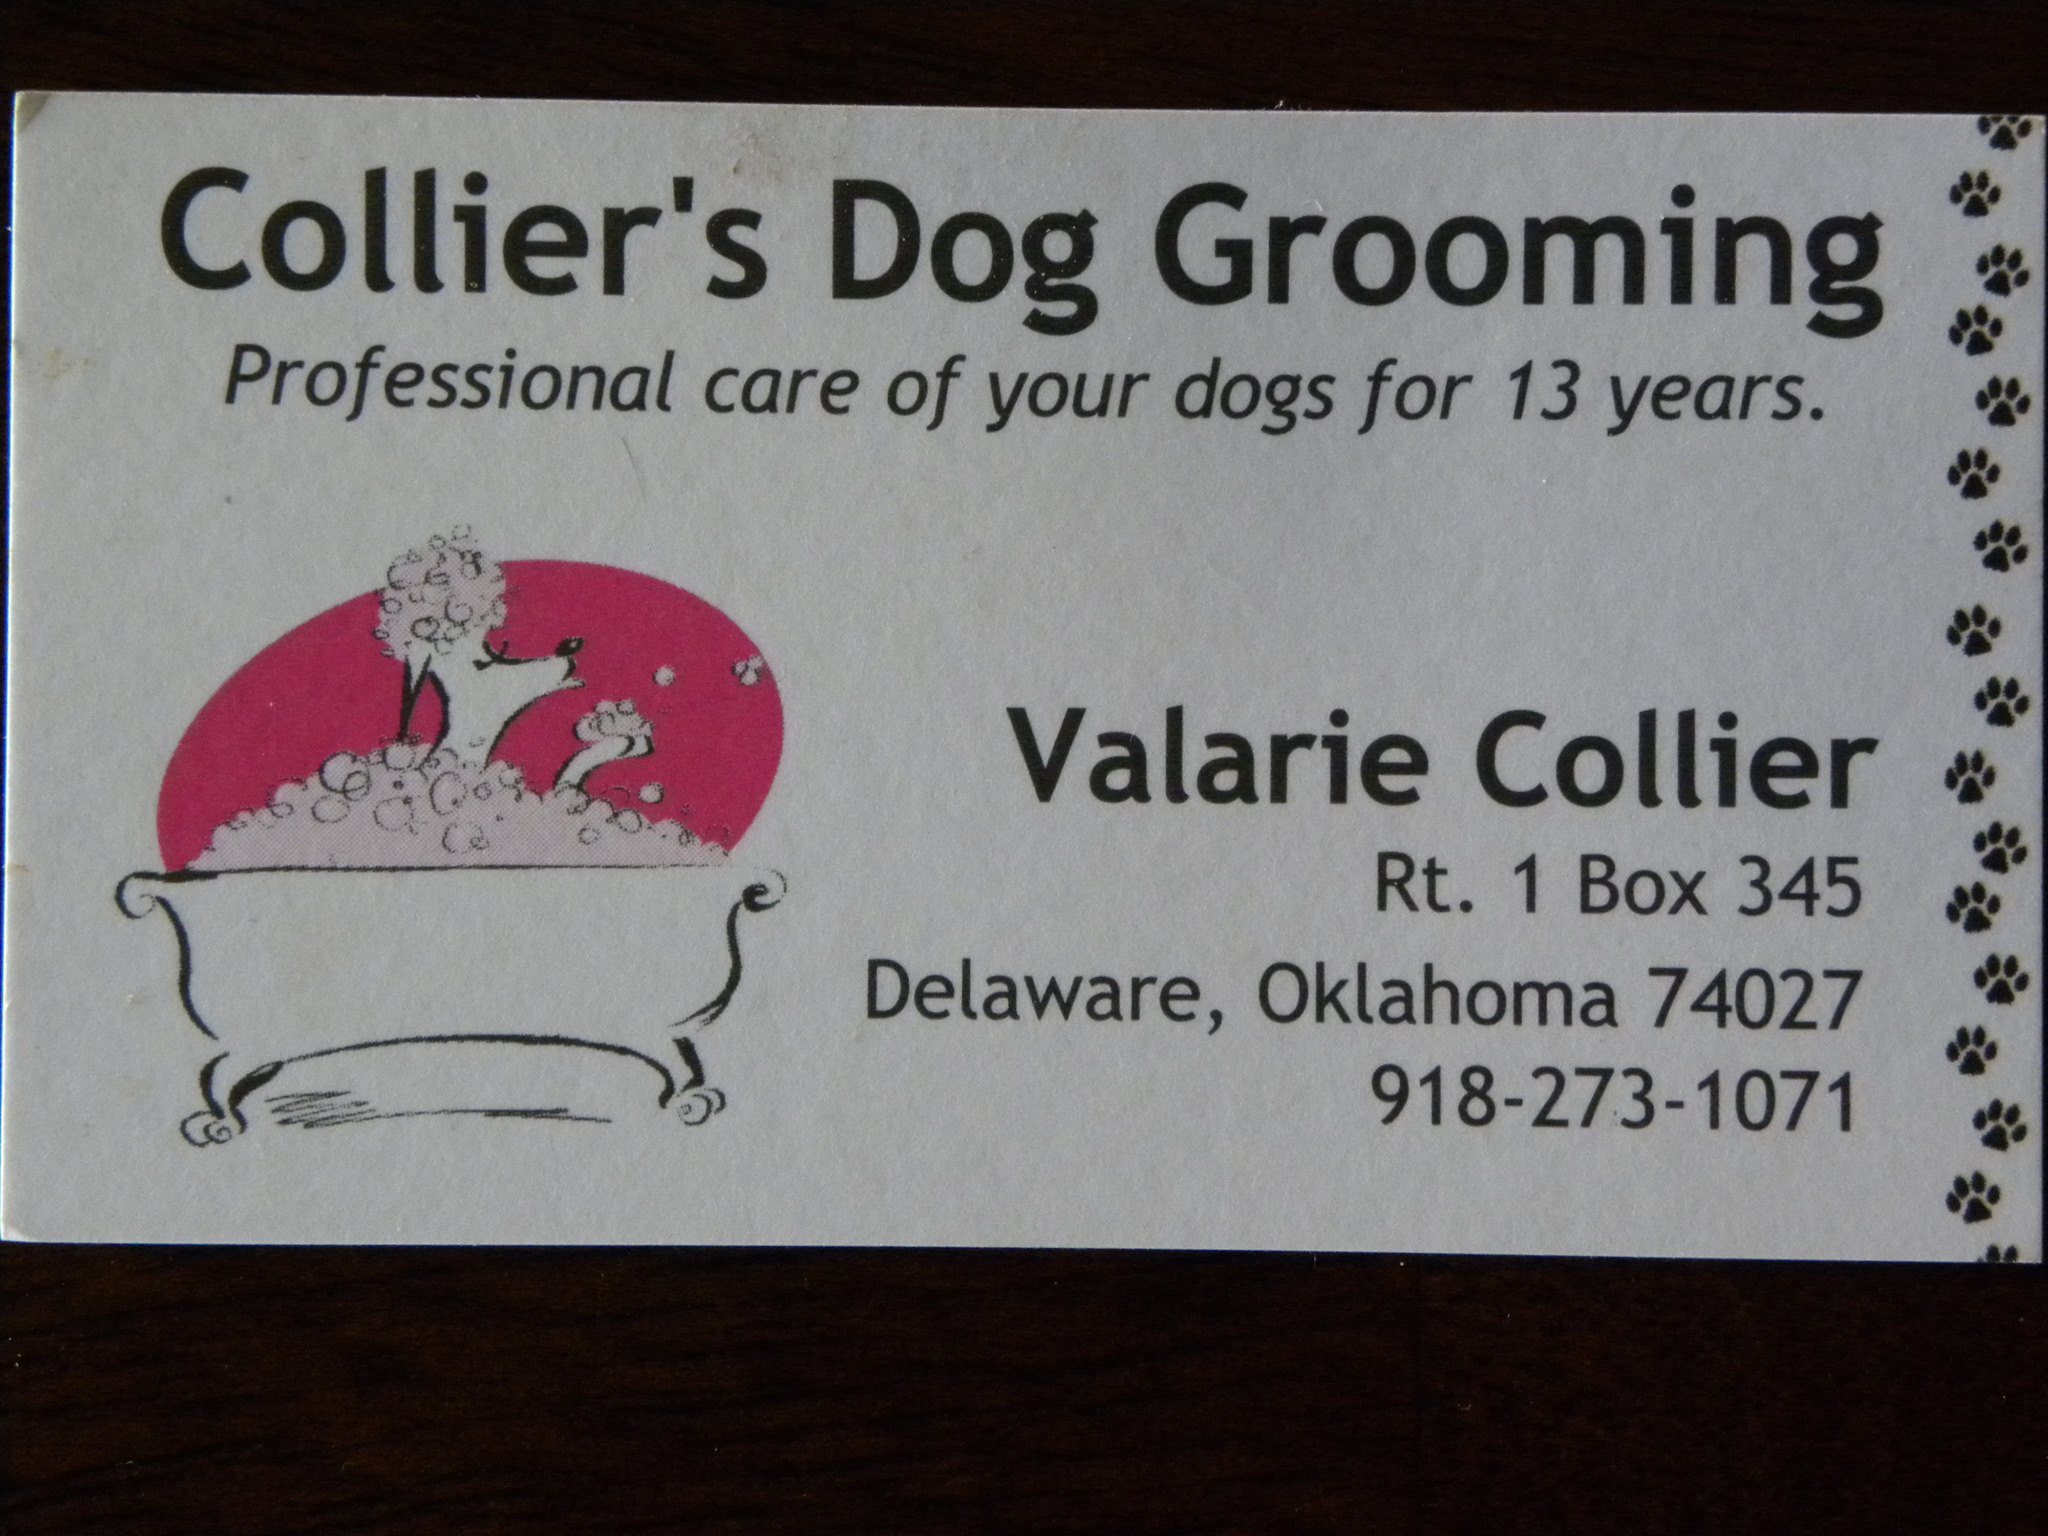 Collier's Dog Grooming 610 N Pecan St, Nowata Oklahoma 74048